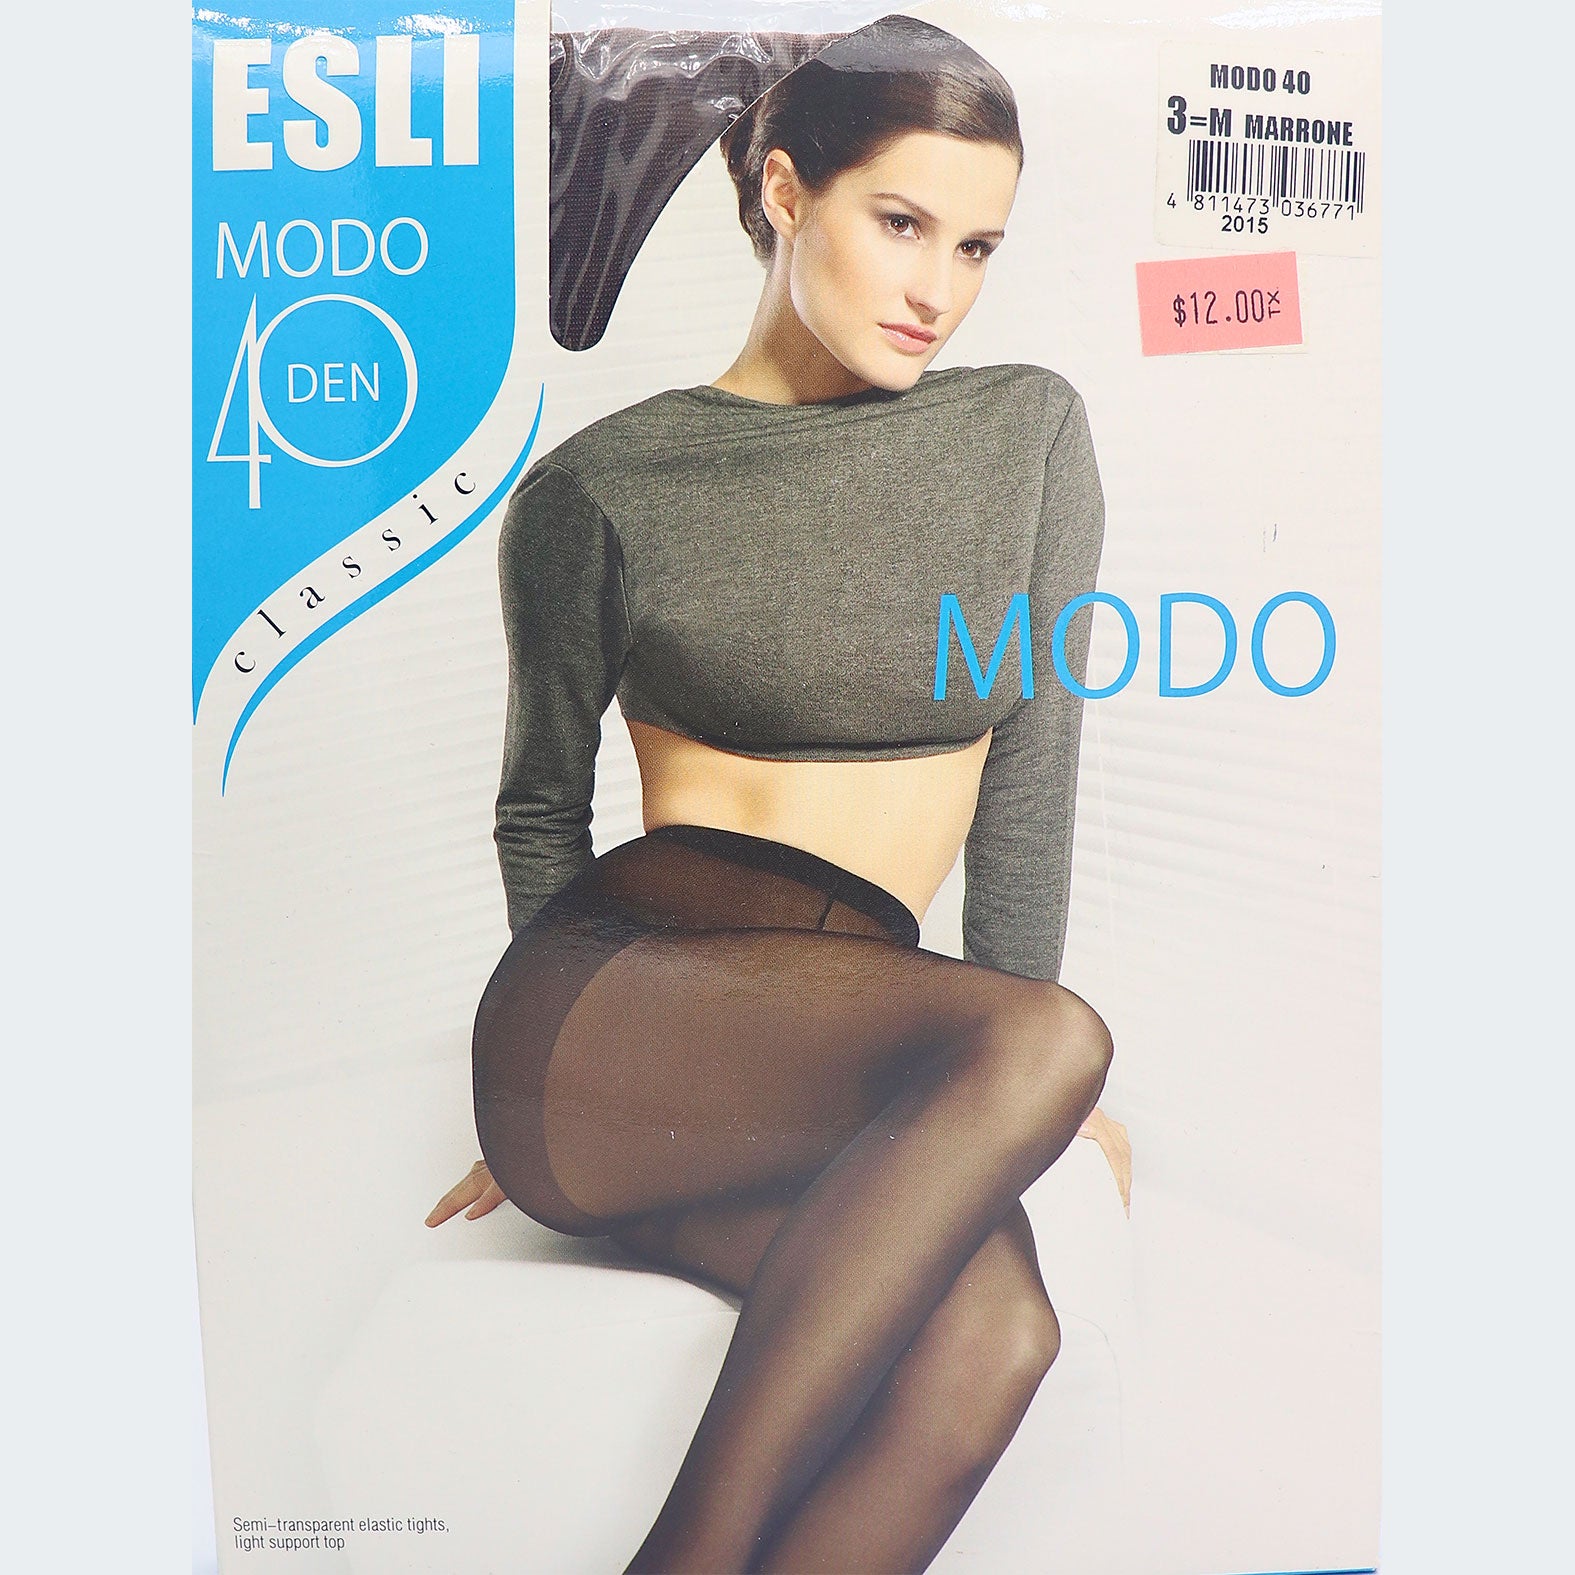 ESLI MODO Classic 40 Den (Non-Control/Reinforced Panty